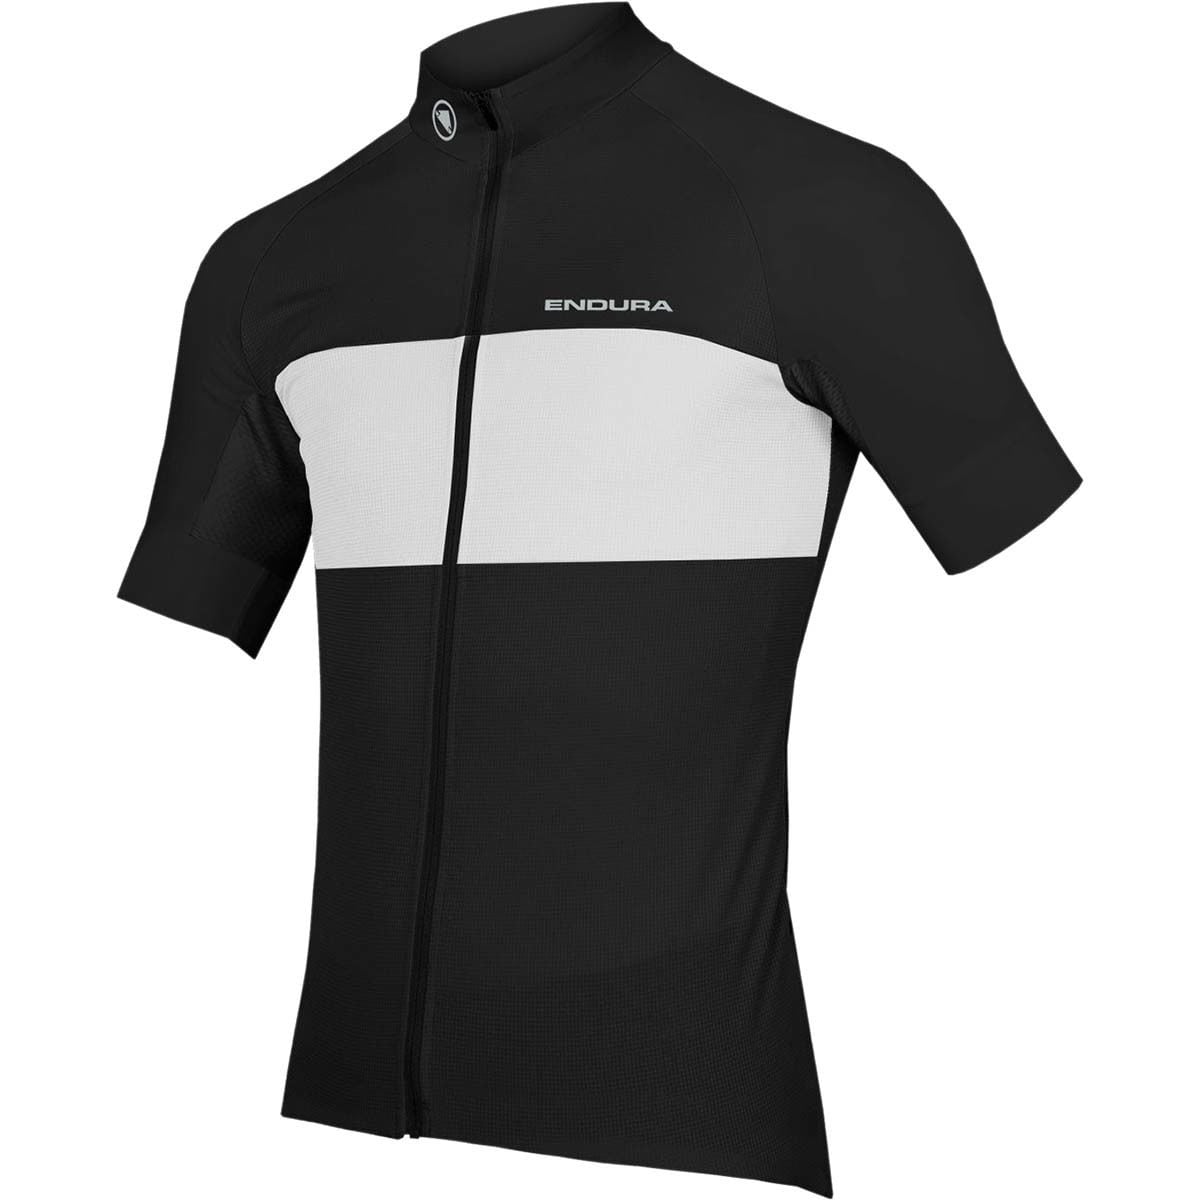 Endura FS260-Pro II Short-Sleeve Jersey - Men's product image